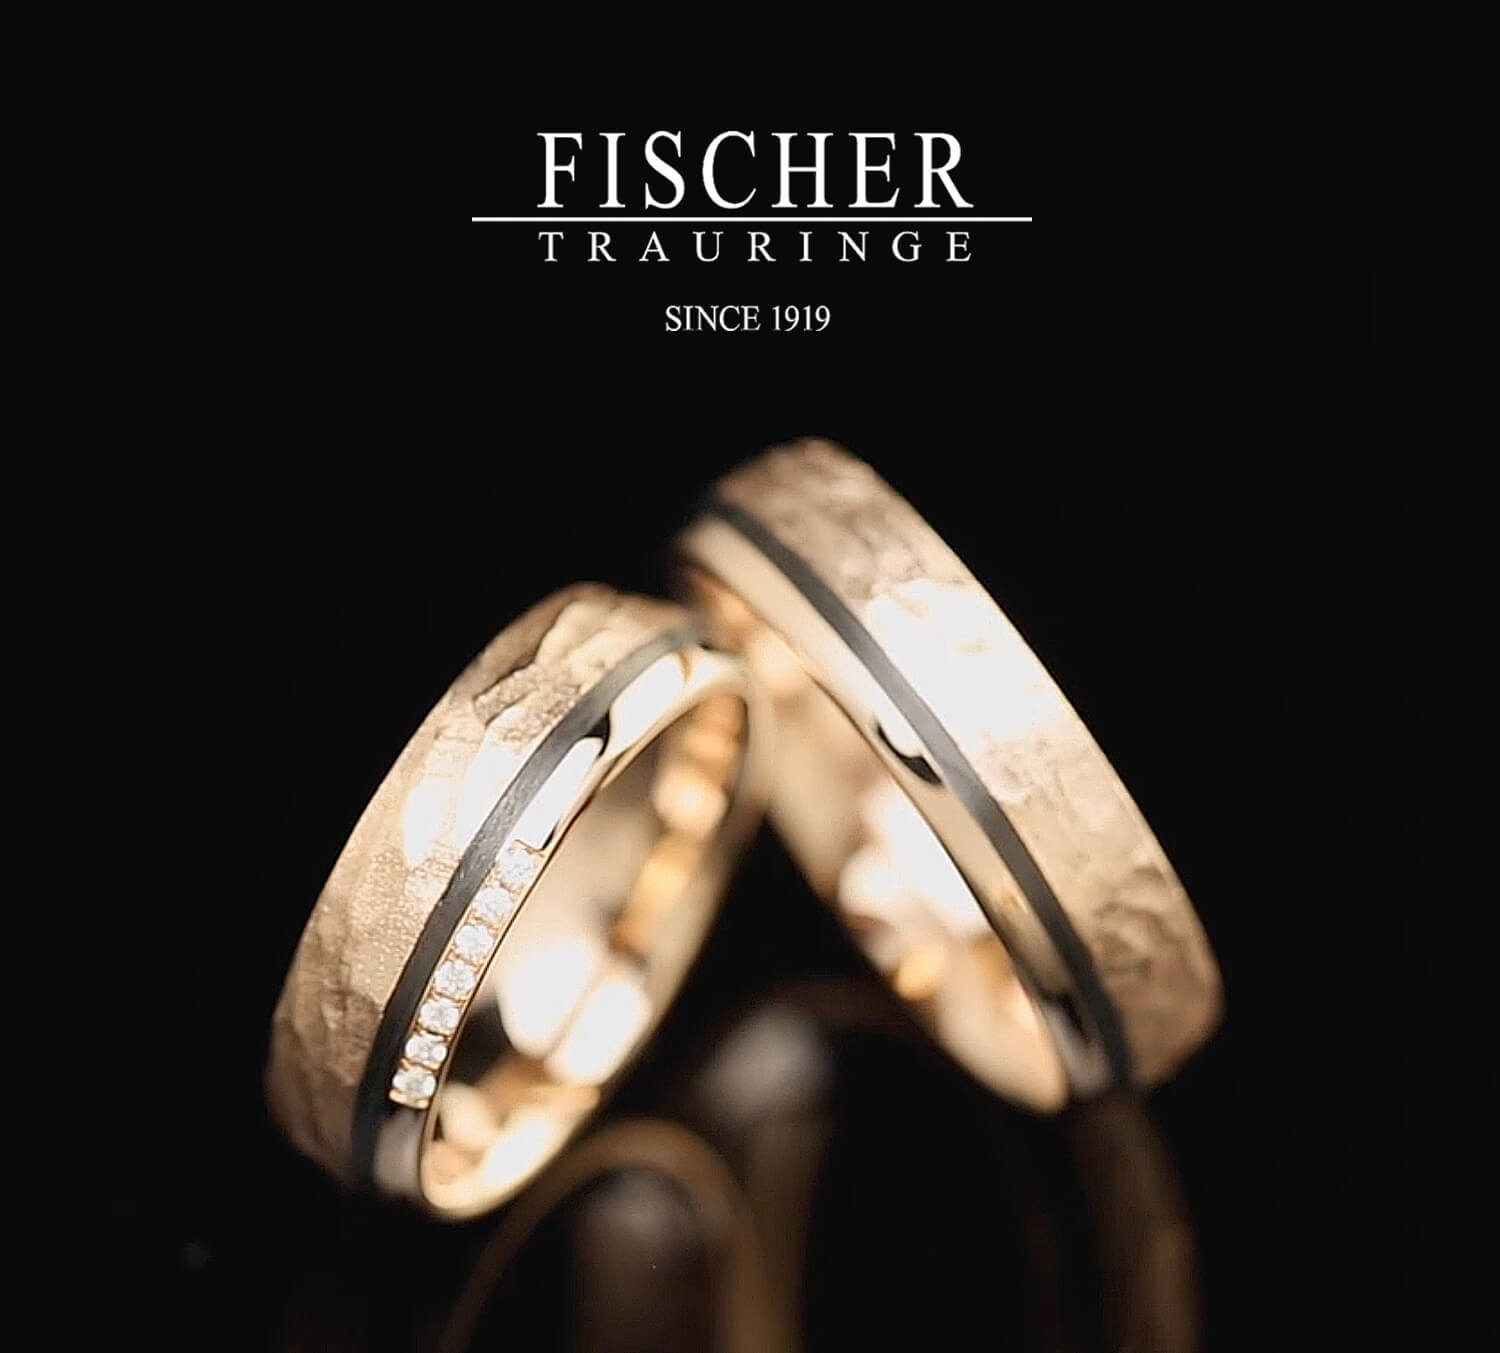 FISCHERフィッシャーの結婚指輪